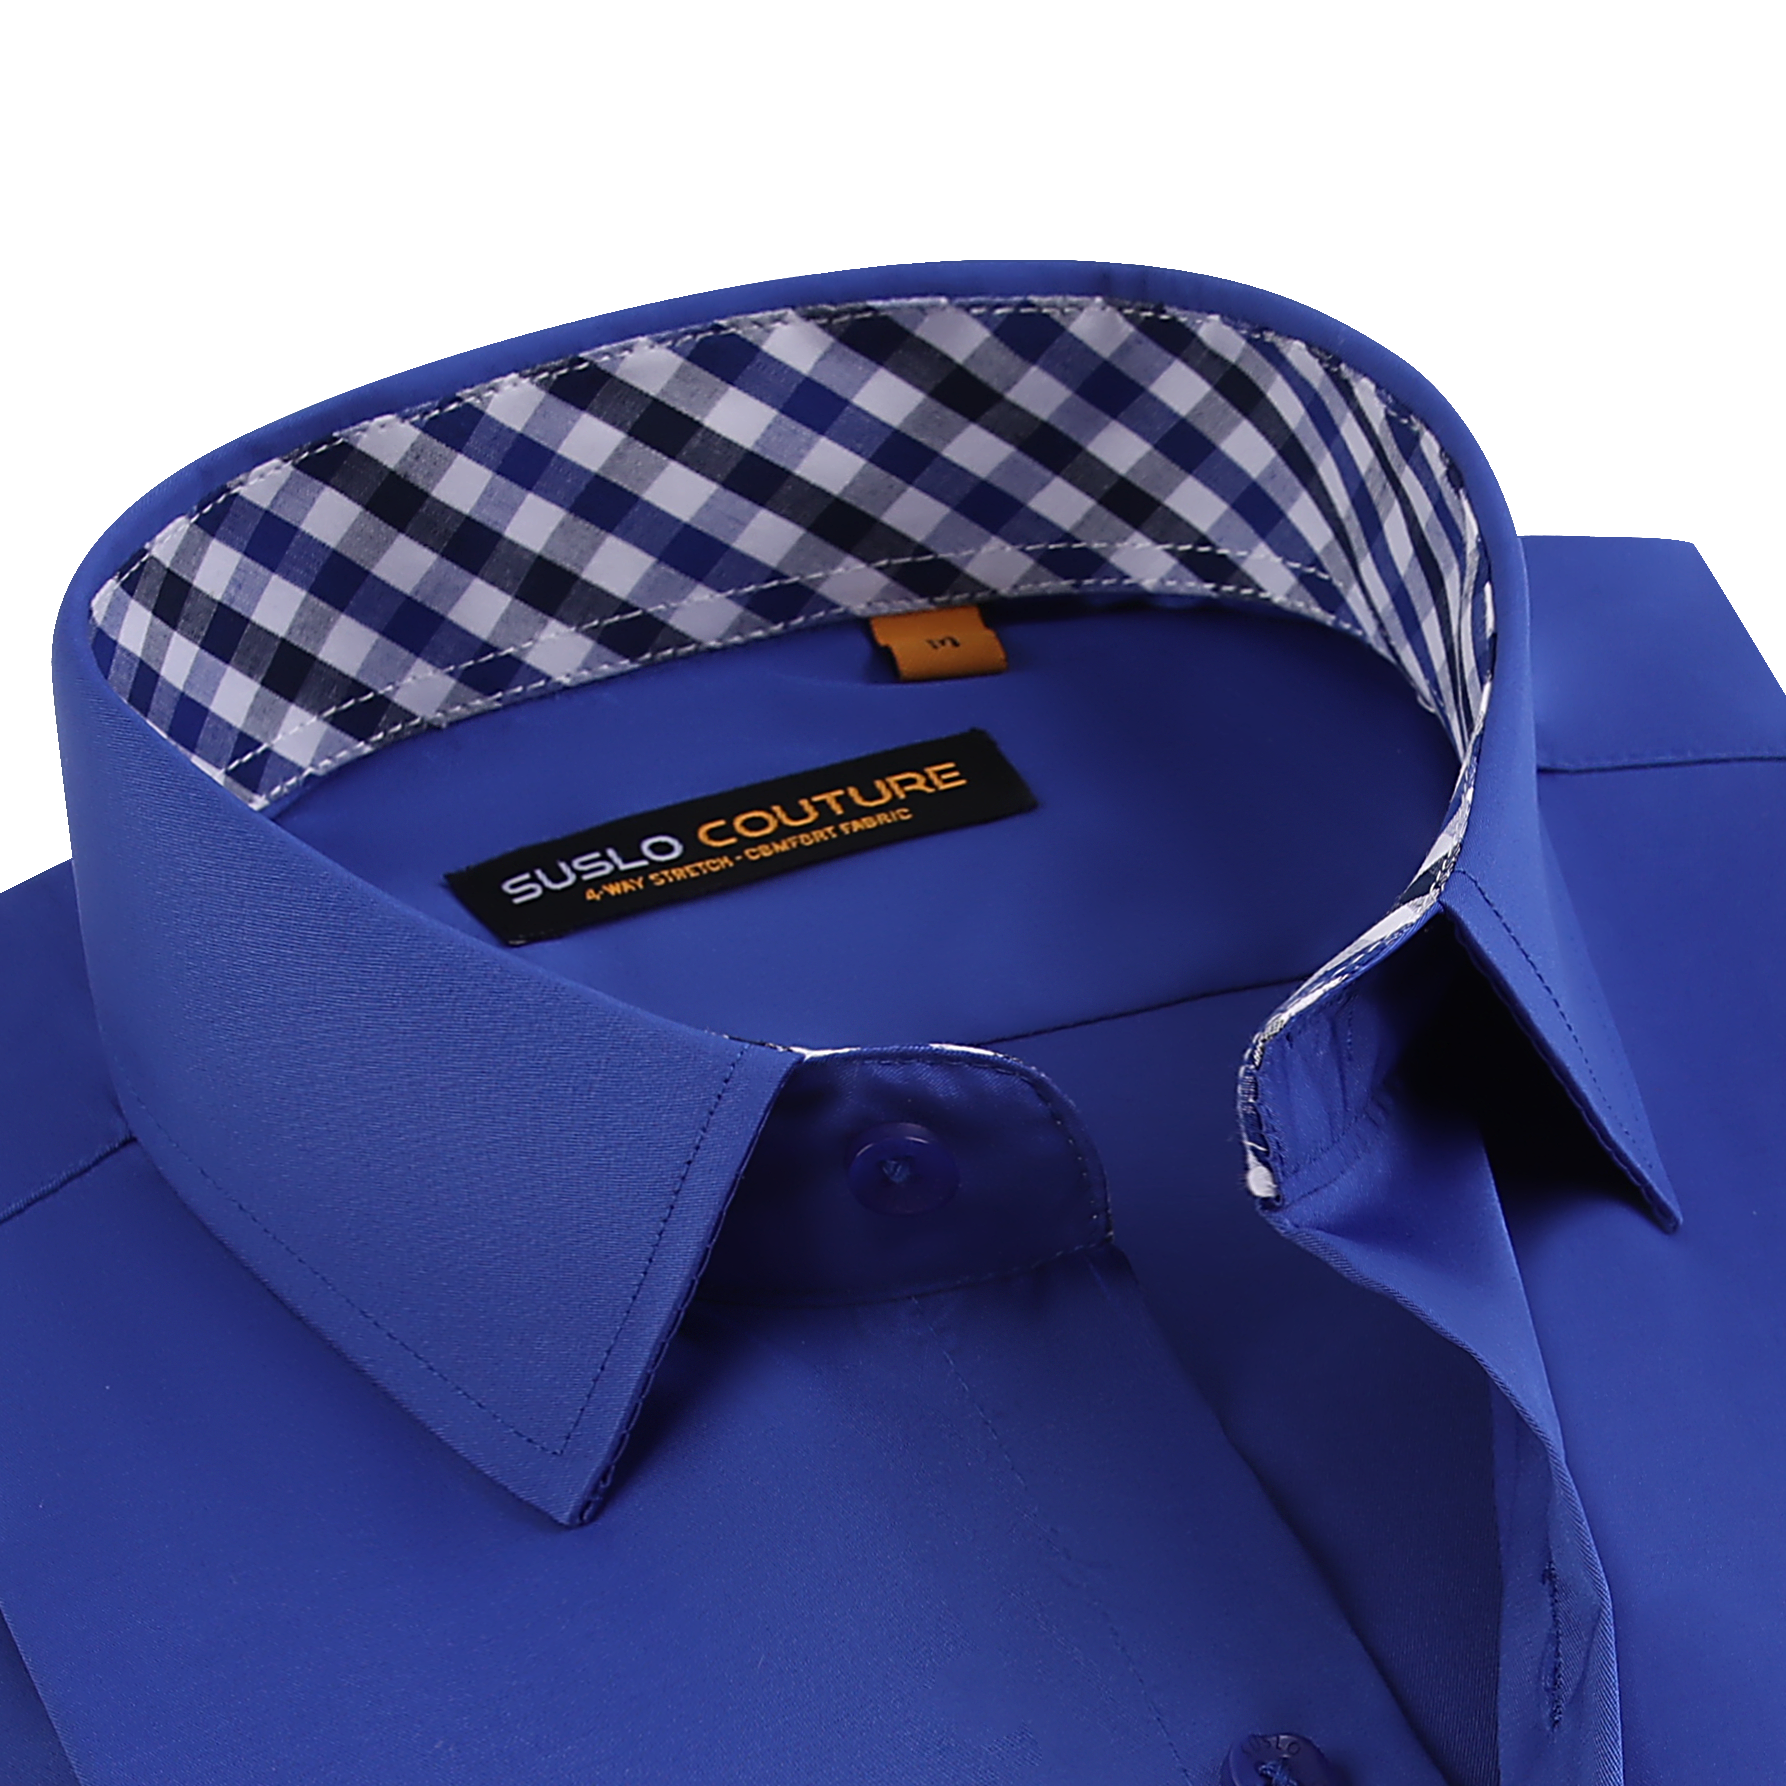 Suslo Solid 4 Way Stretch Short Sleeve Shirt - Royal